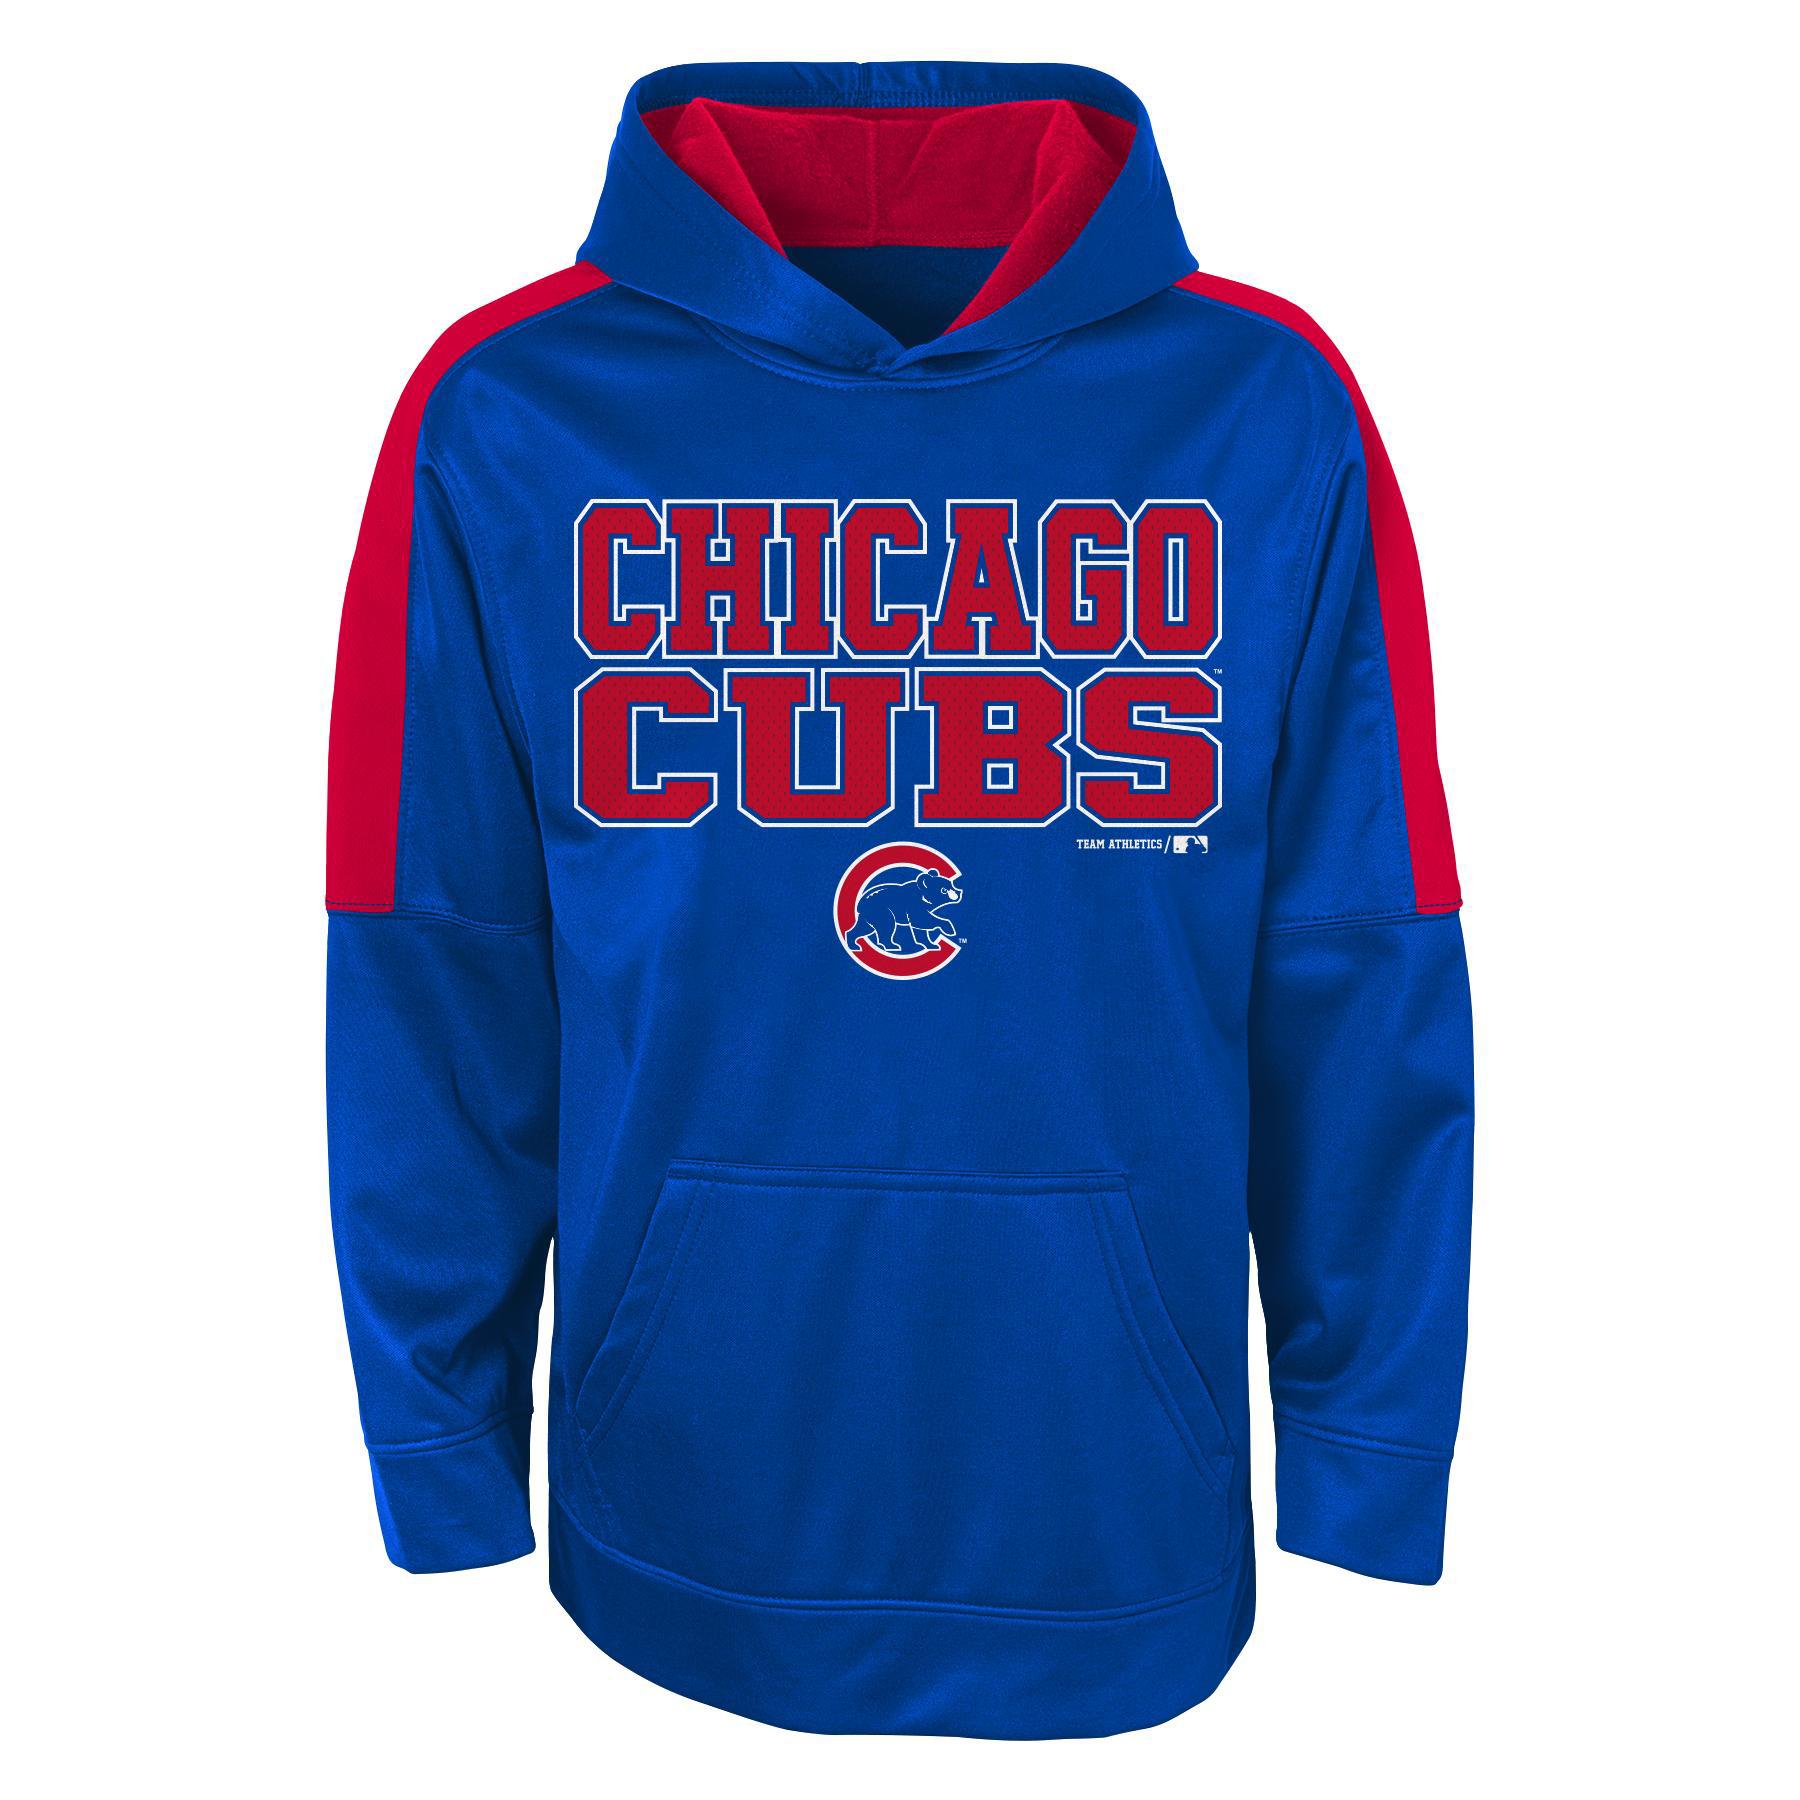 MLB Boys' Hooded Sweatshirt - Chicago Cubs